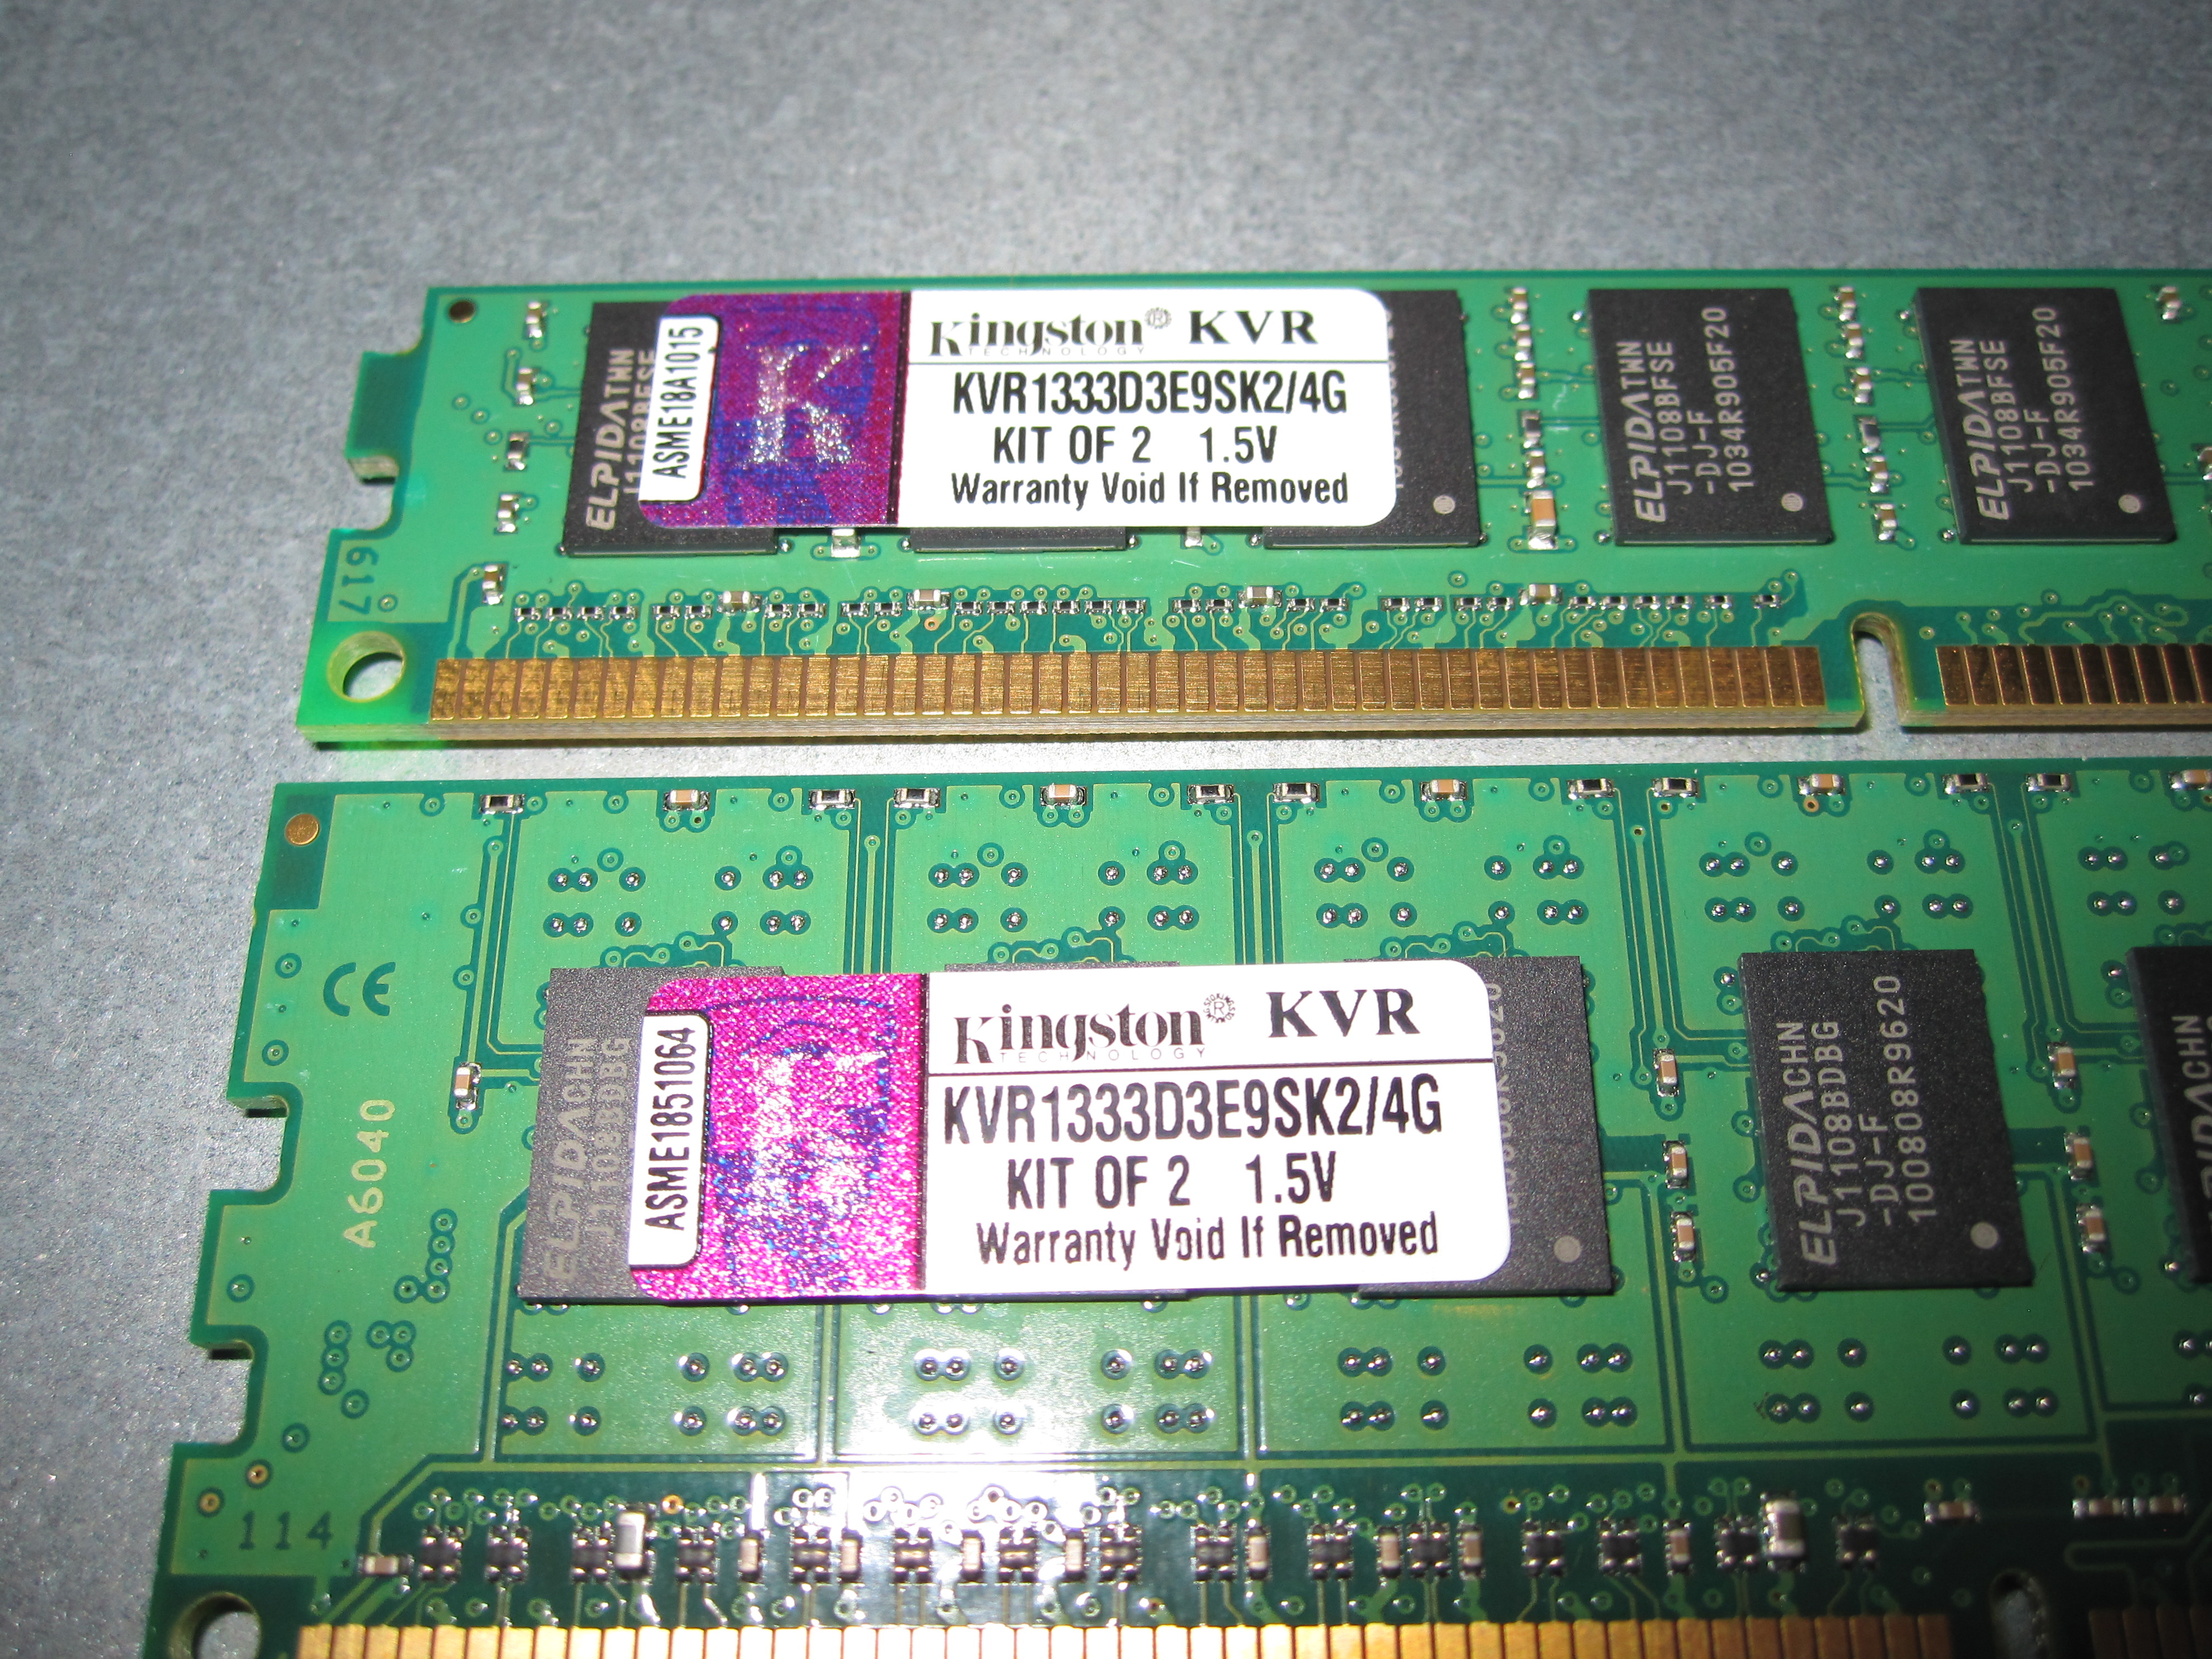 Dimm и udimm. Различие UDIMM И DIMM. Отличие DIMM от so-DIMM от UDIMM. Kingston KVR kvr15811,4 пo00005968305 RSSY in Taiwan (2) Warranty Void II Remix. 3d 1333 783.